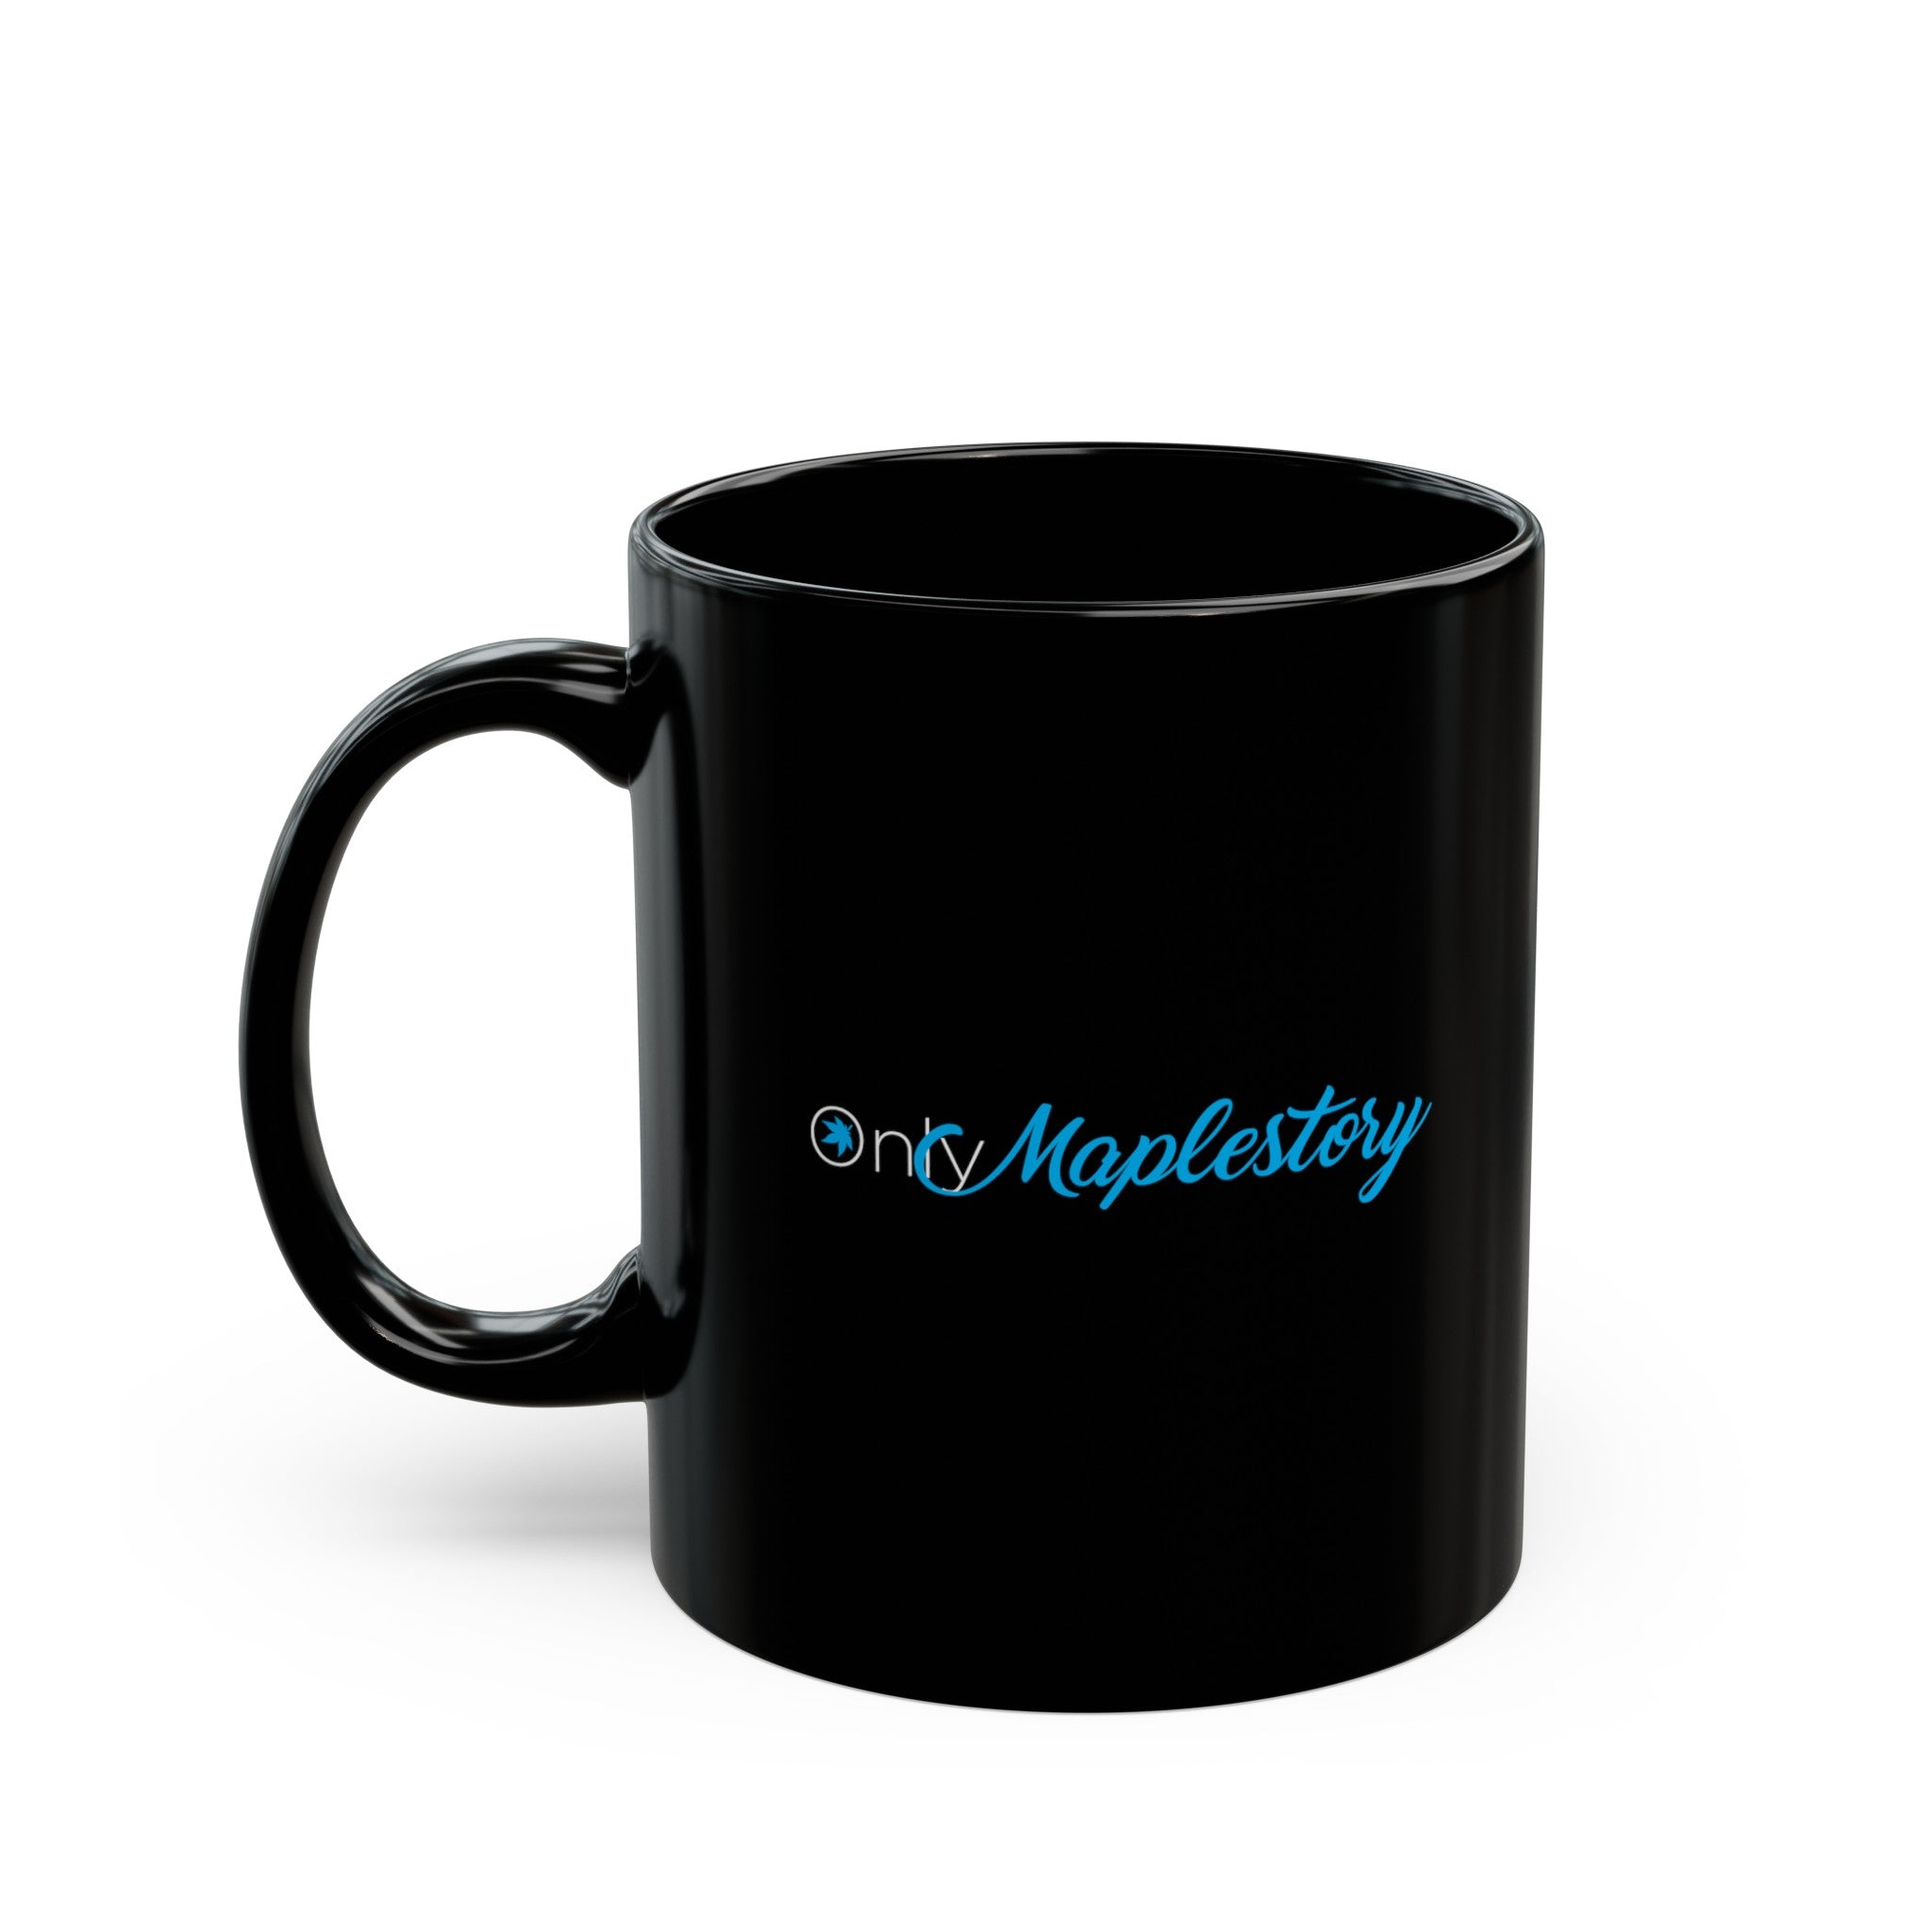 Only Maplestory Funny Black Mug (11oz, 15oz) Humor Humour Joke Comedy Fans maple mapler maplesea mapleglobal cup gift mug birthday